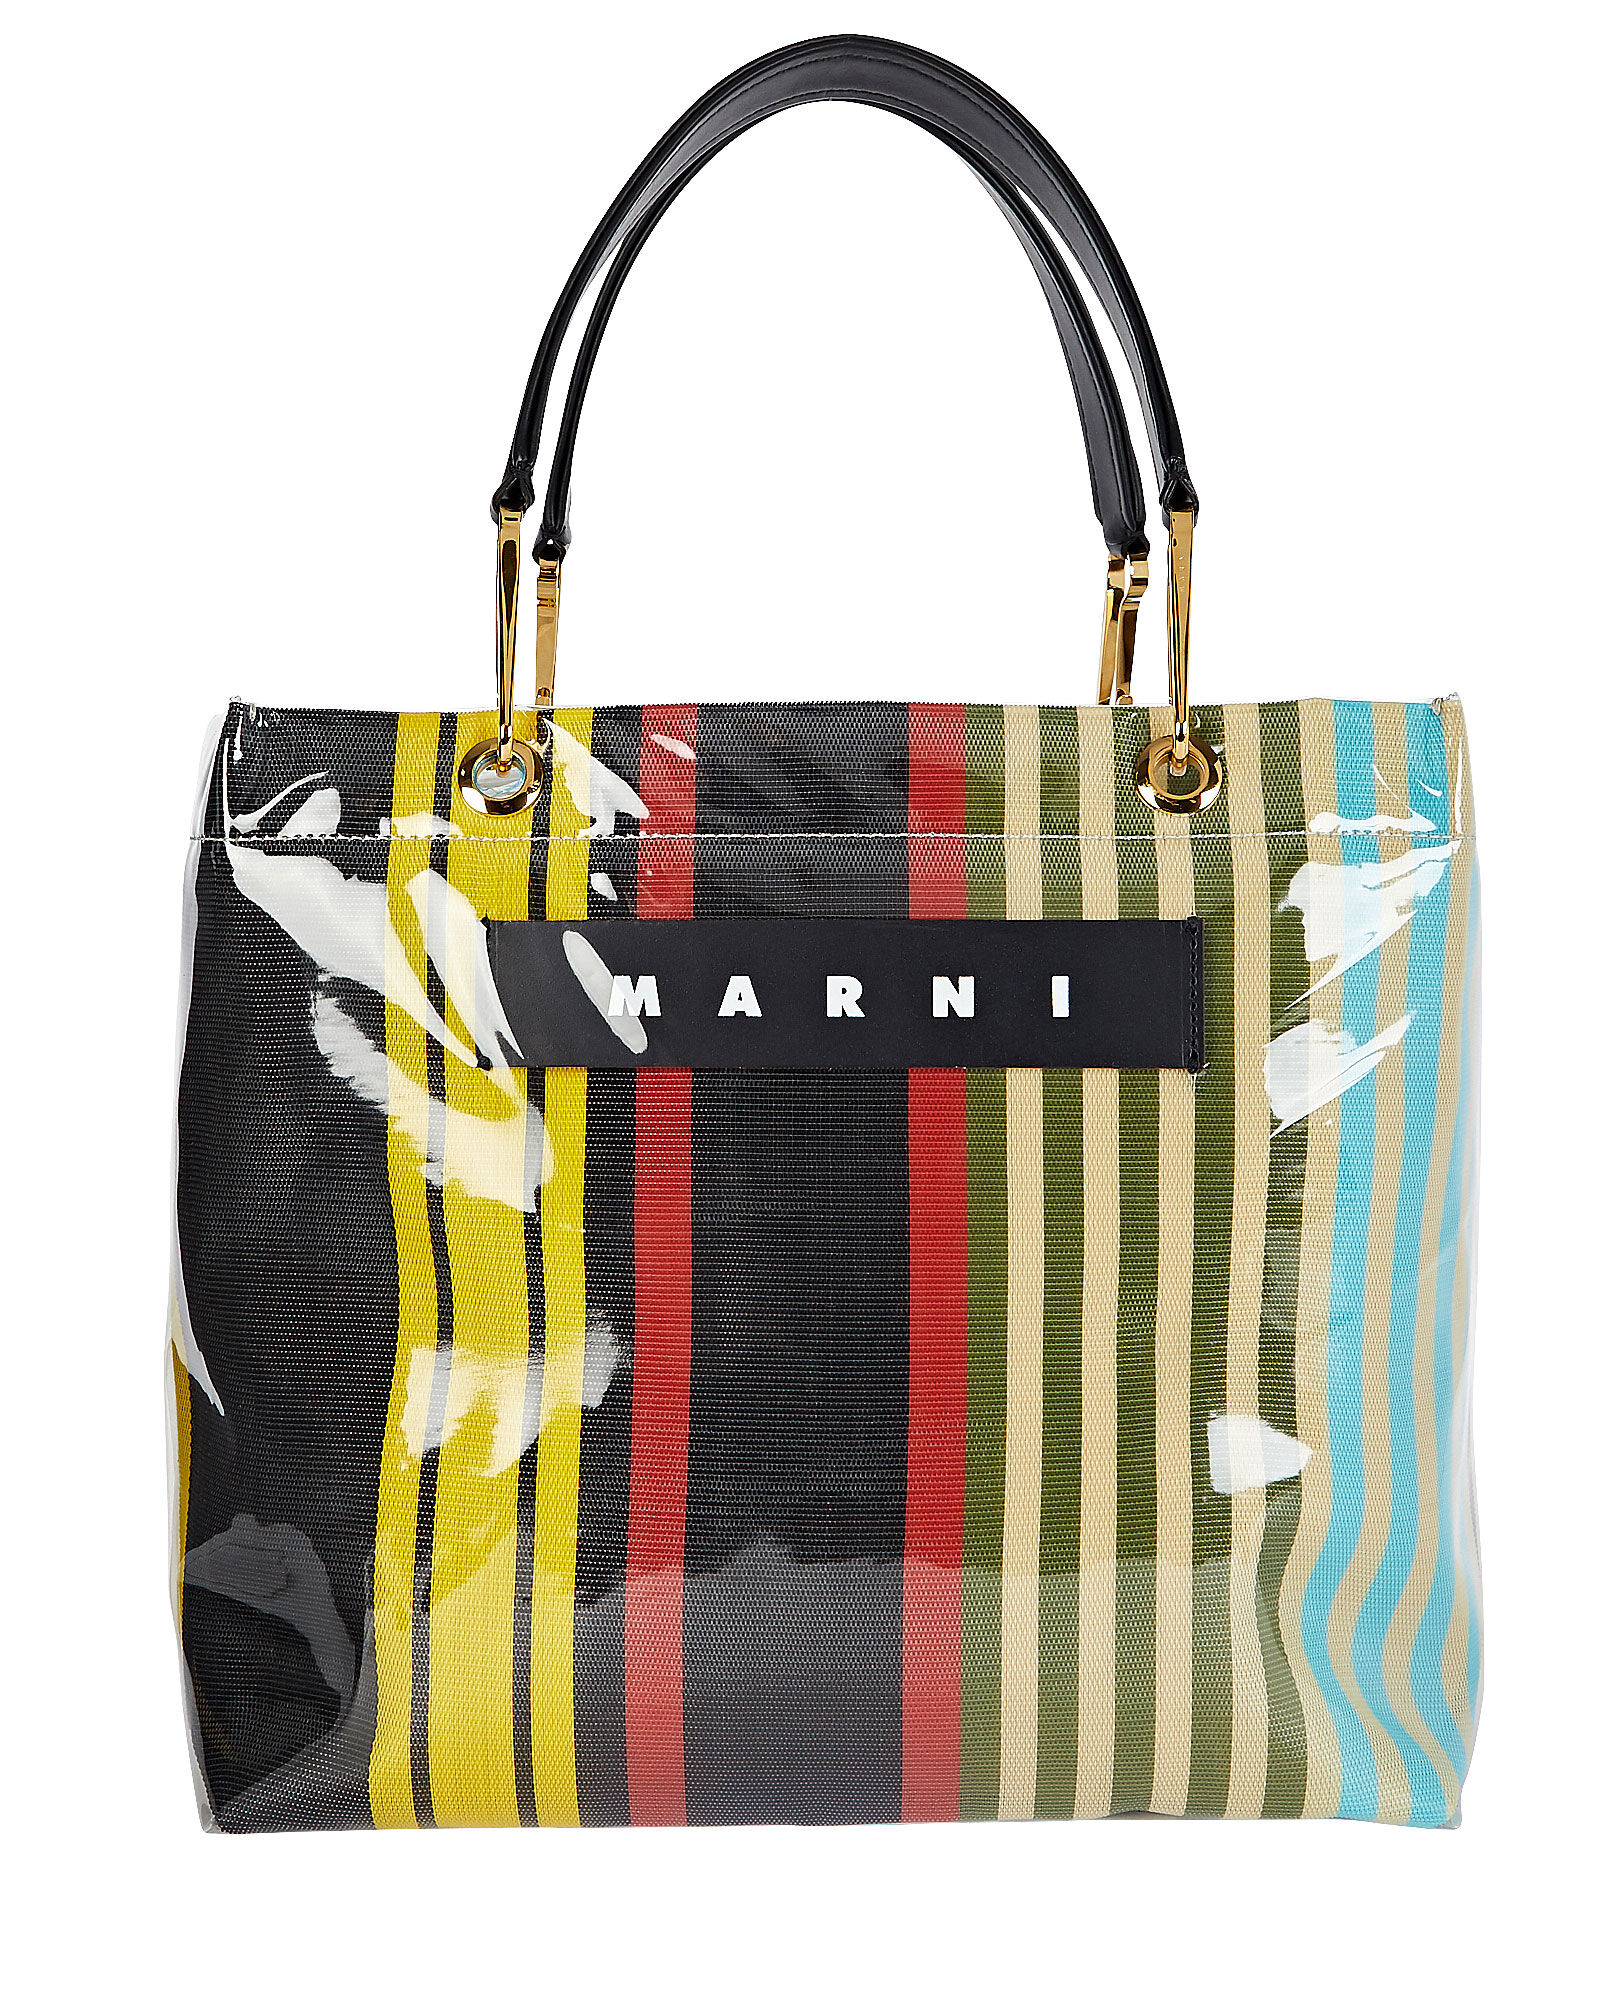 Marni Glossy Grip Logo Striped Tote Bag | INTERMIX®